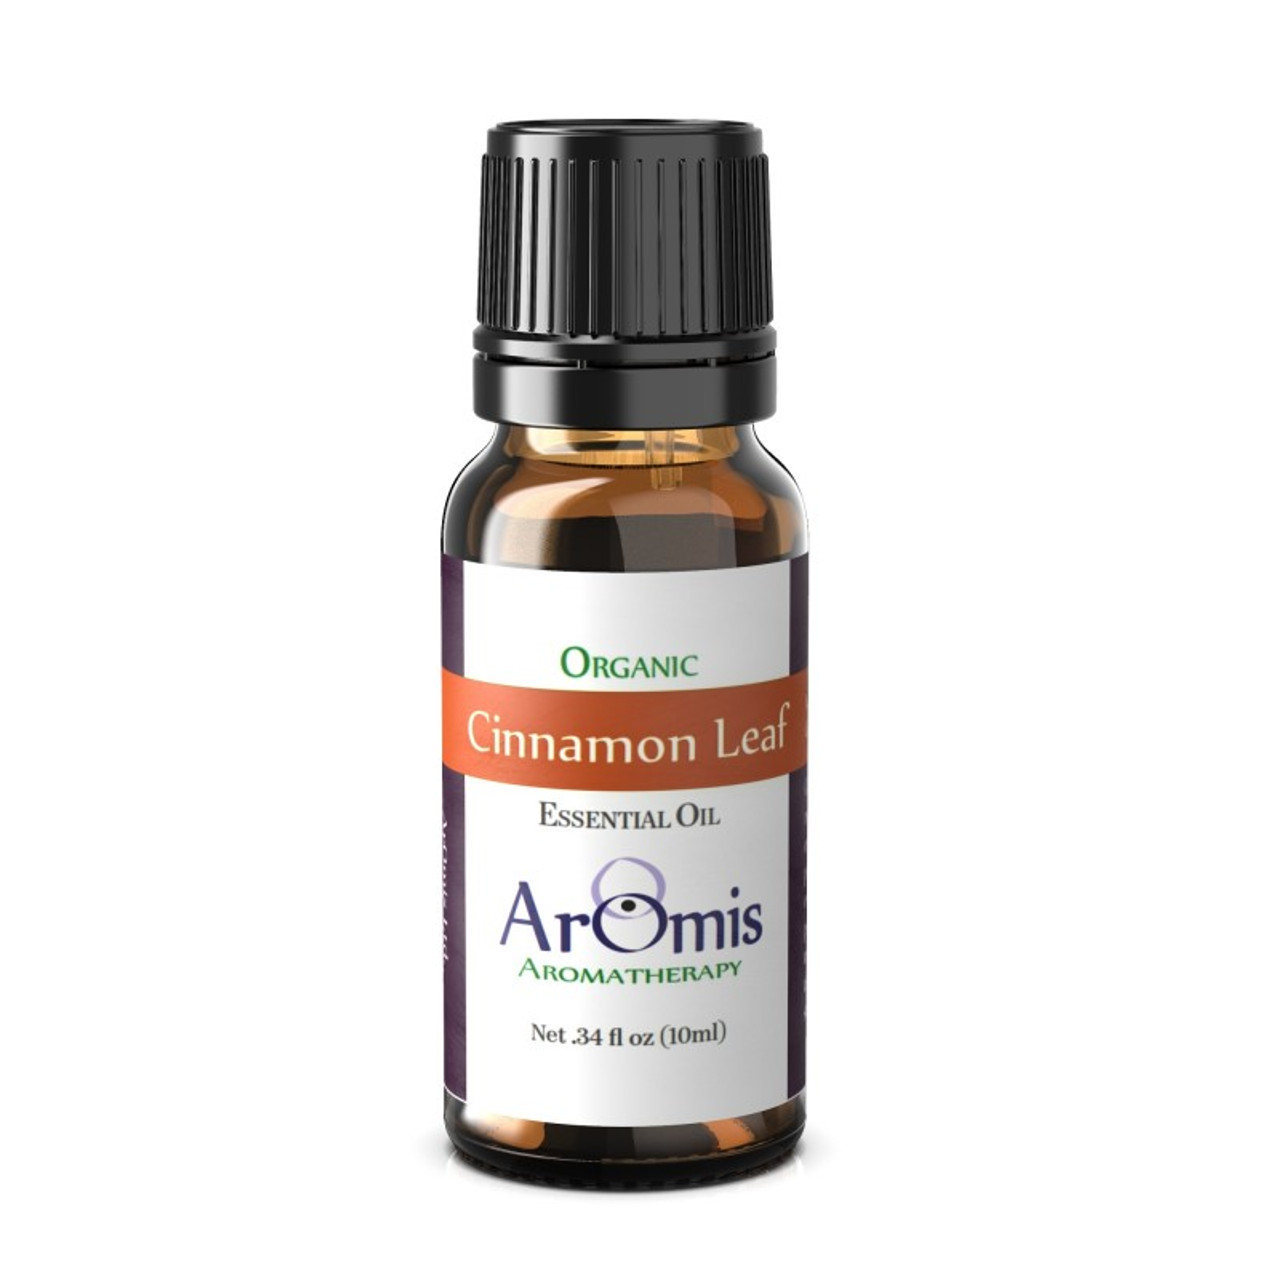 Cinnamon Leaf Essential Oil — Shanti Aromatherapy